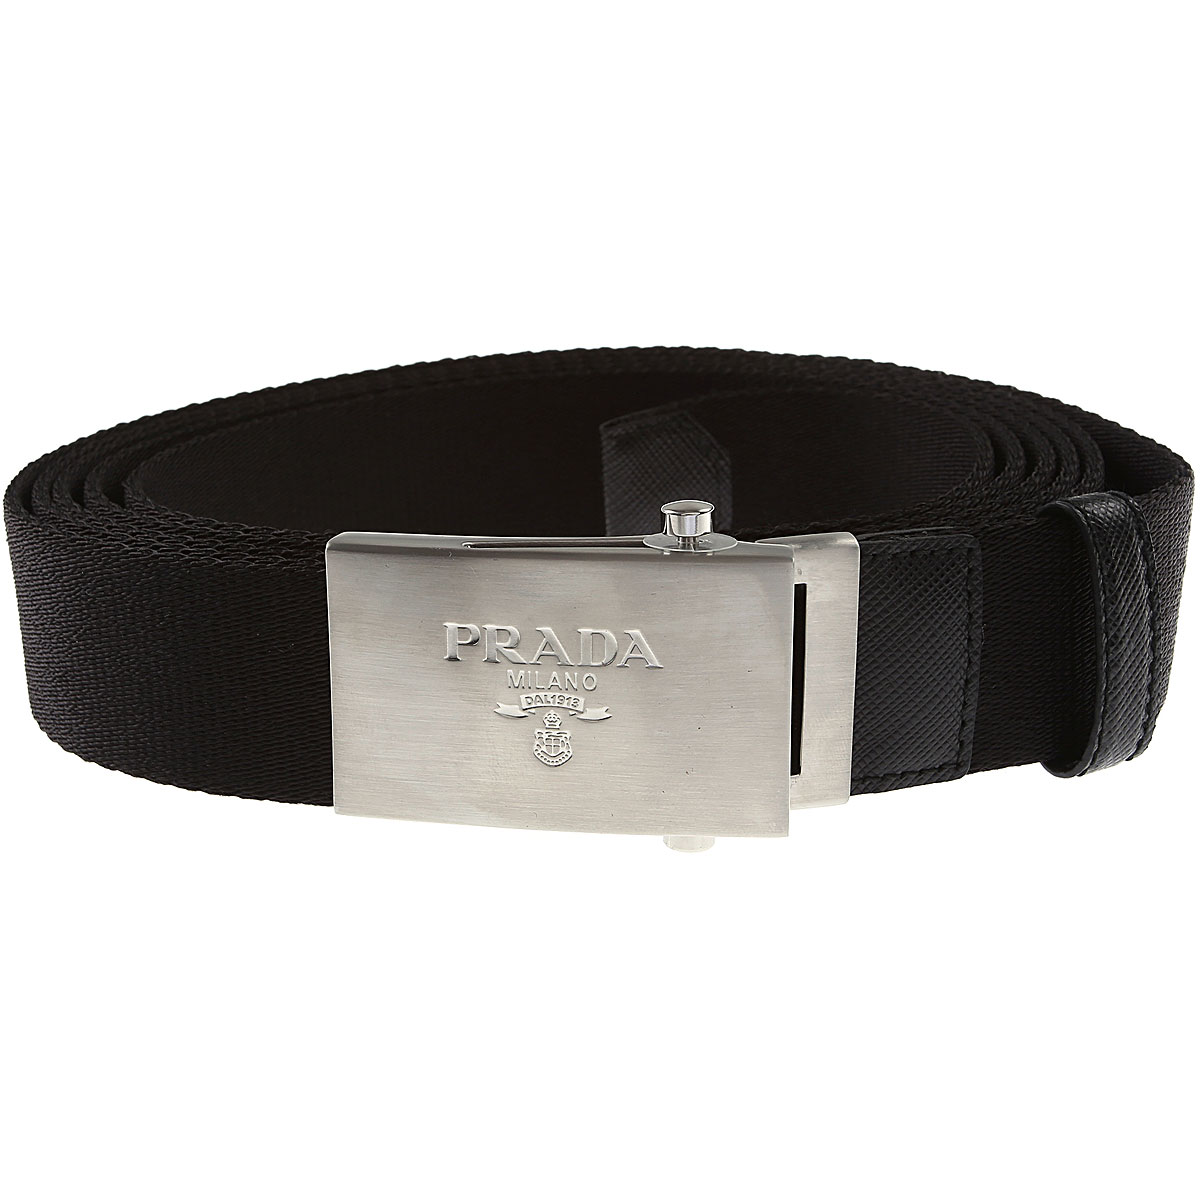 Mens Belts Prada, Style code: 2cn047-bv1-f0002